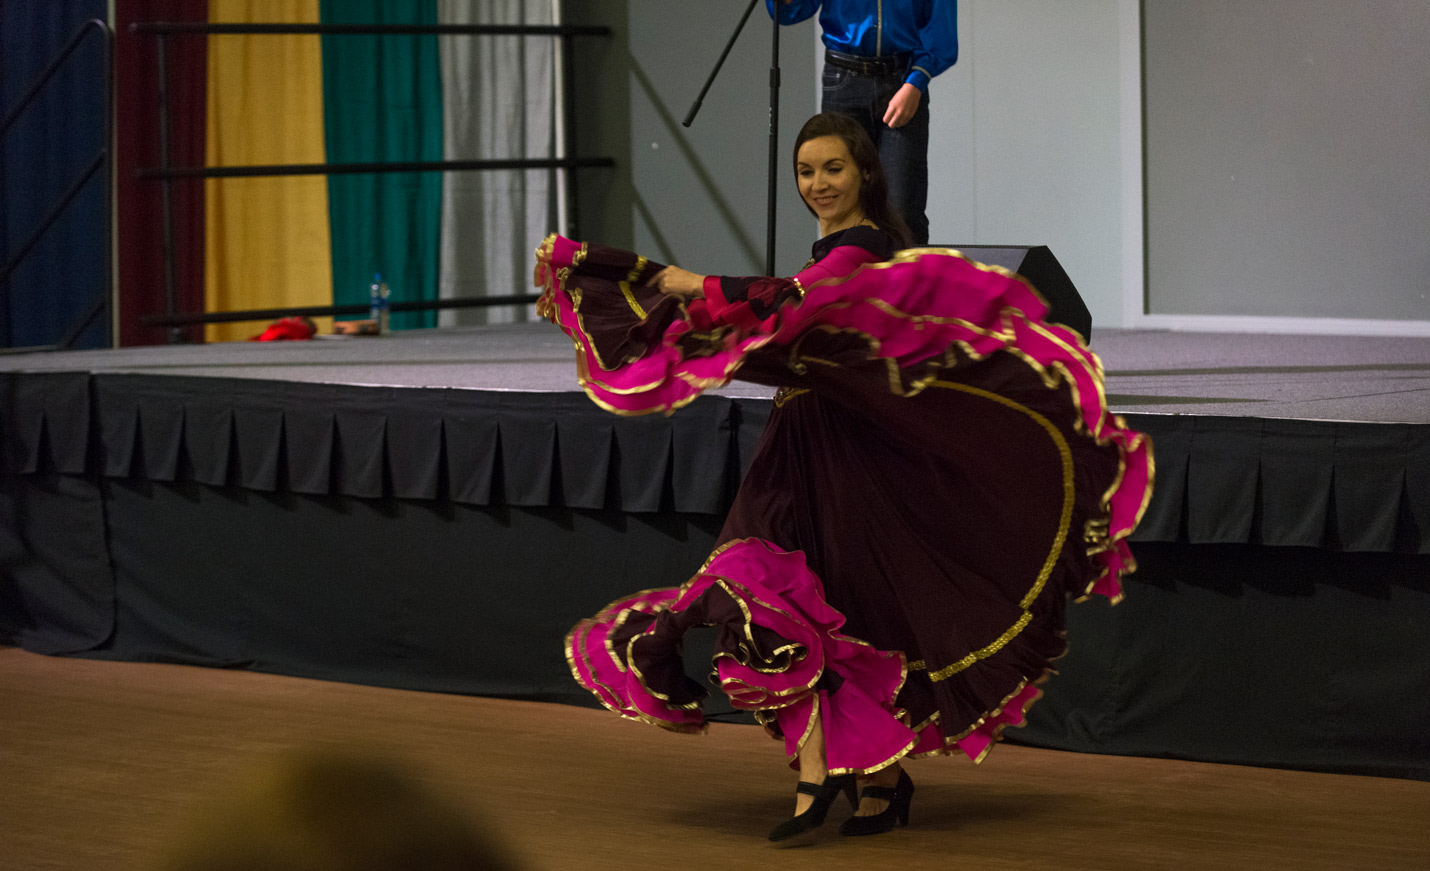 A dancer performs in Spanish attire